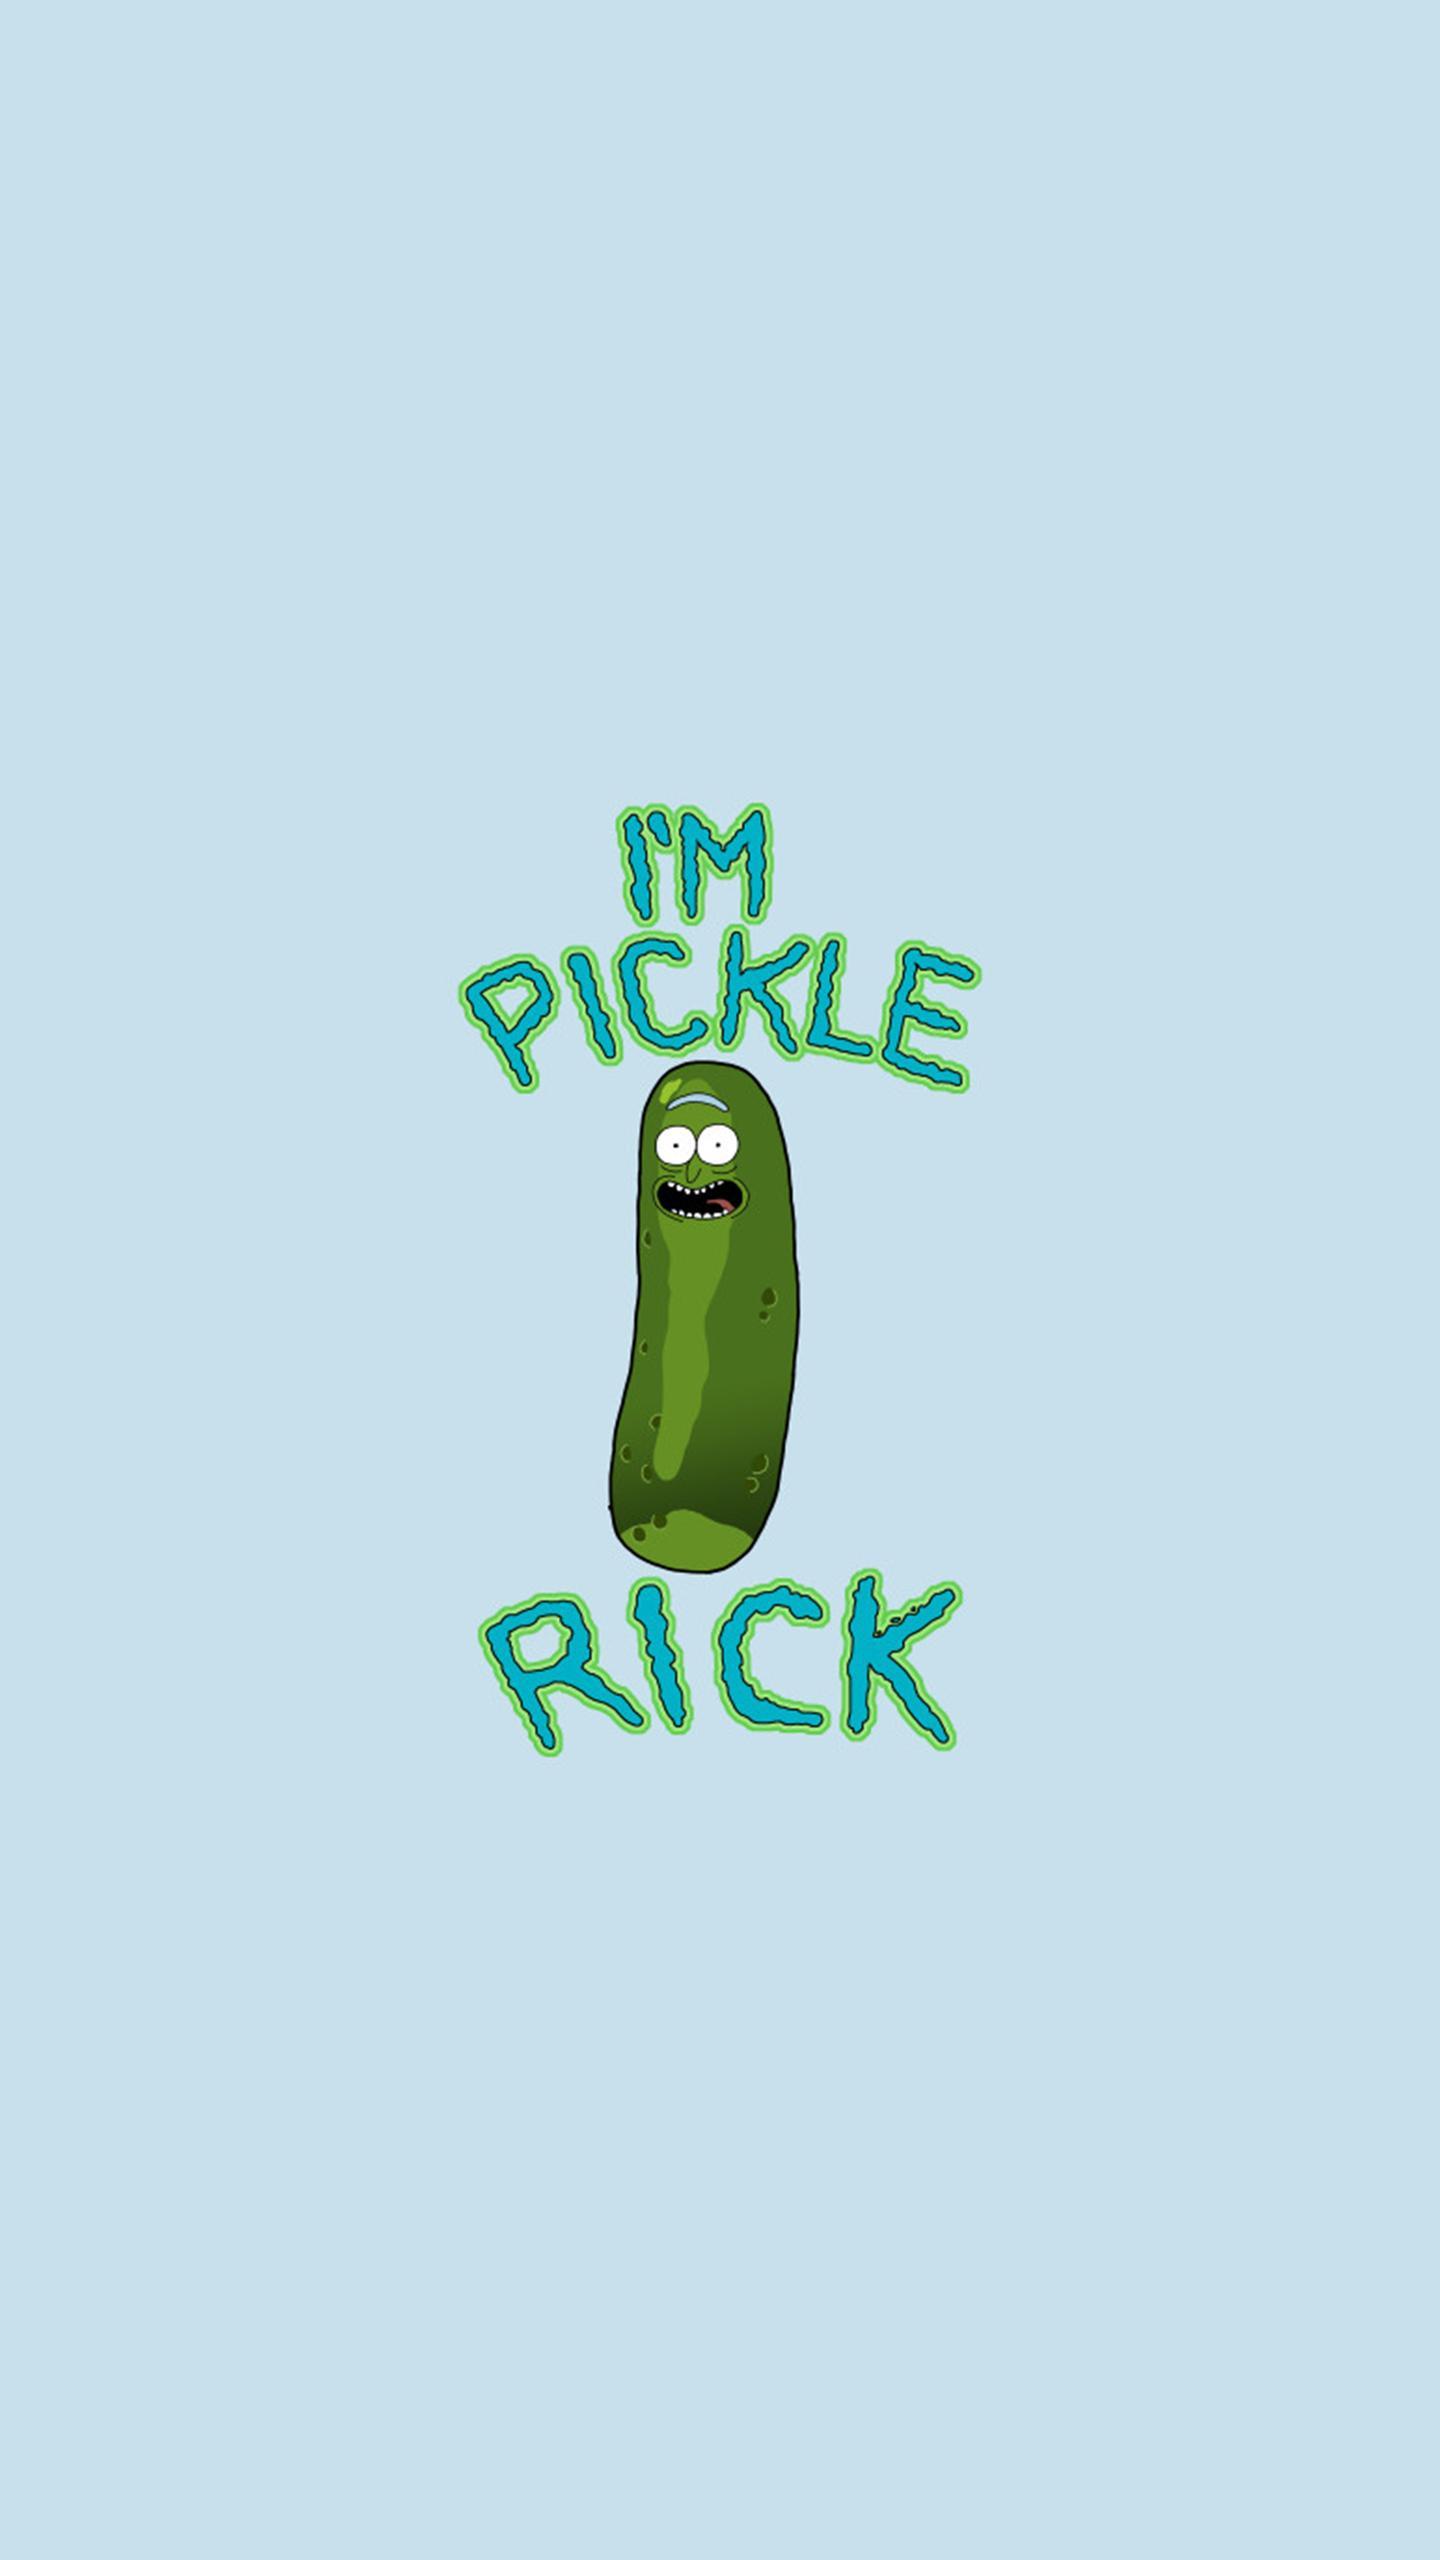 Pickle Rick Wallpaper for Mobile Phone